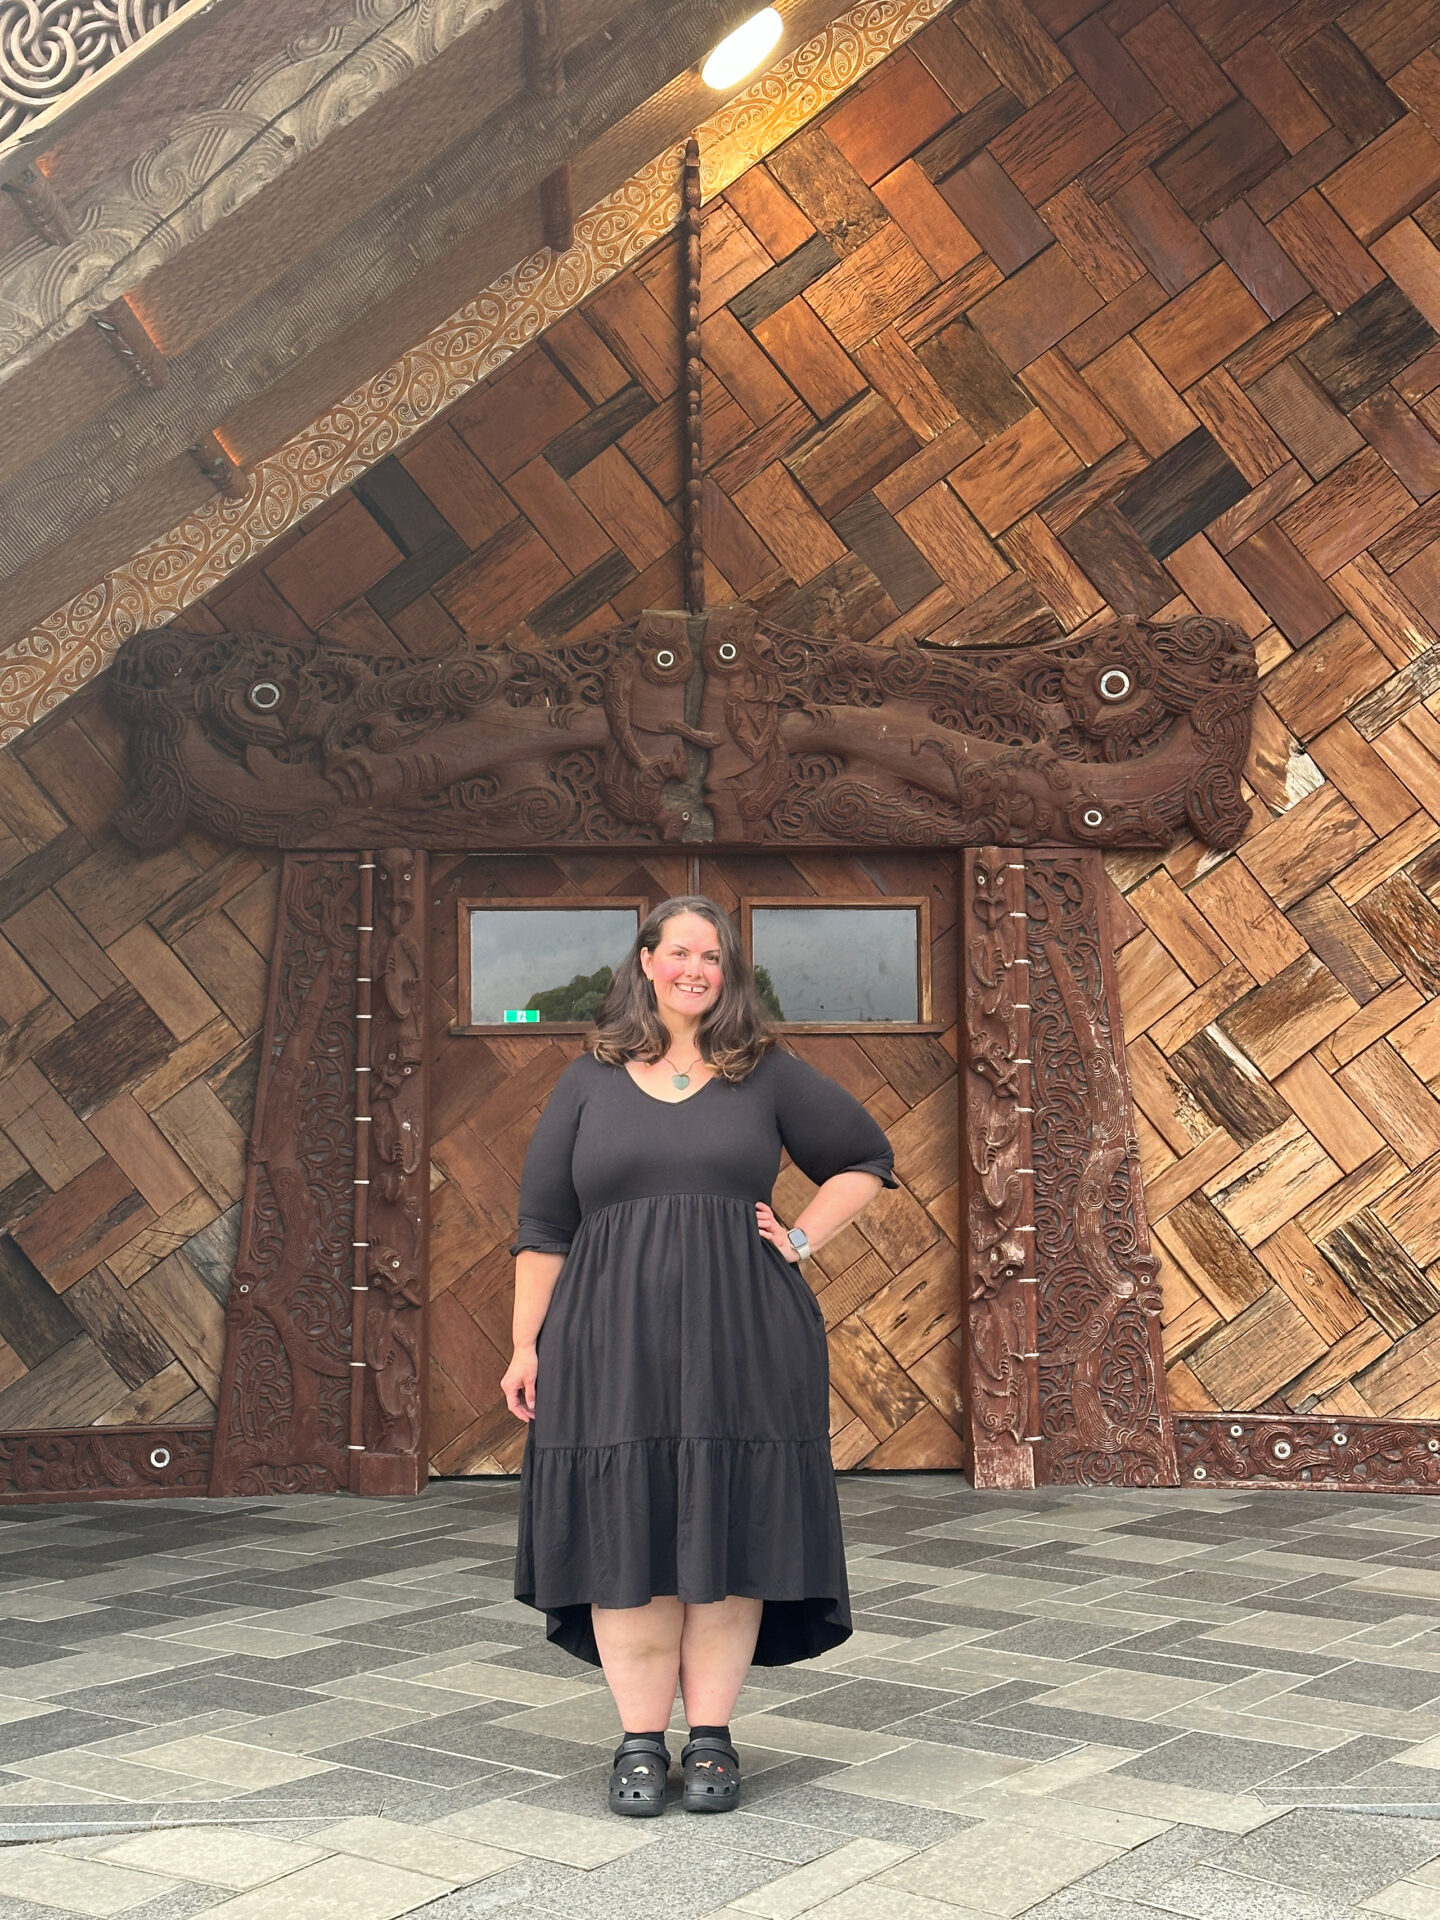 Meagan, a fat Māori woman with lipoedema, stands in front of Ngākau Māhaki, the whare whakairo (carved meeting house) on Te Noho Kotahitanga Marae. She is wearing a black flowing dress and black platform crocs.